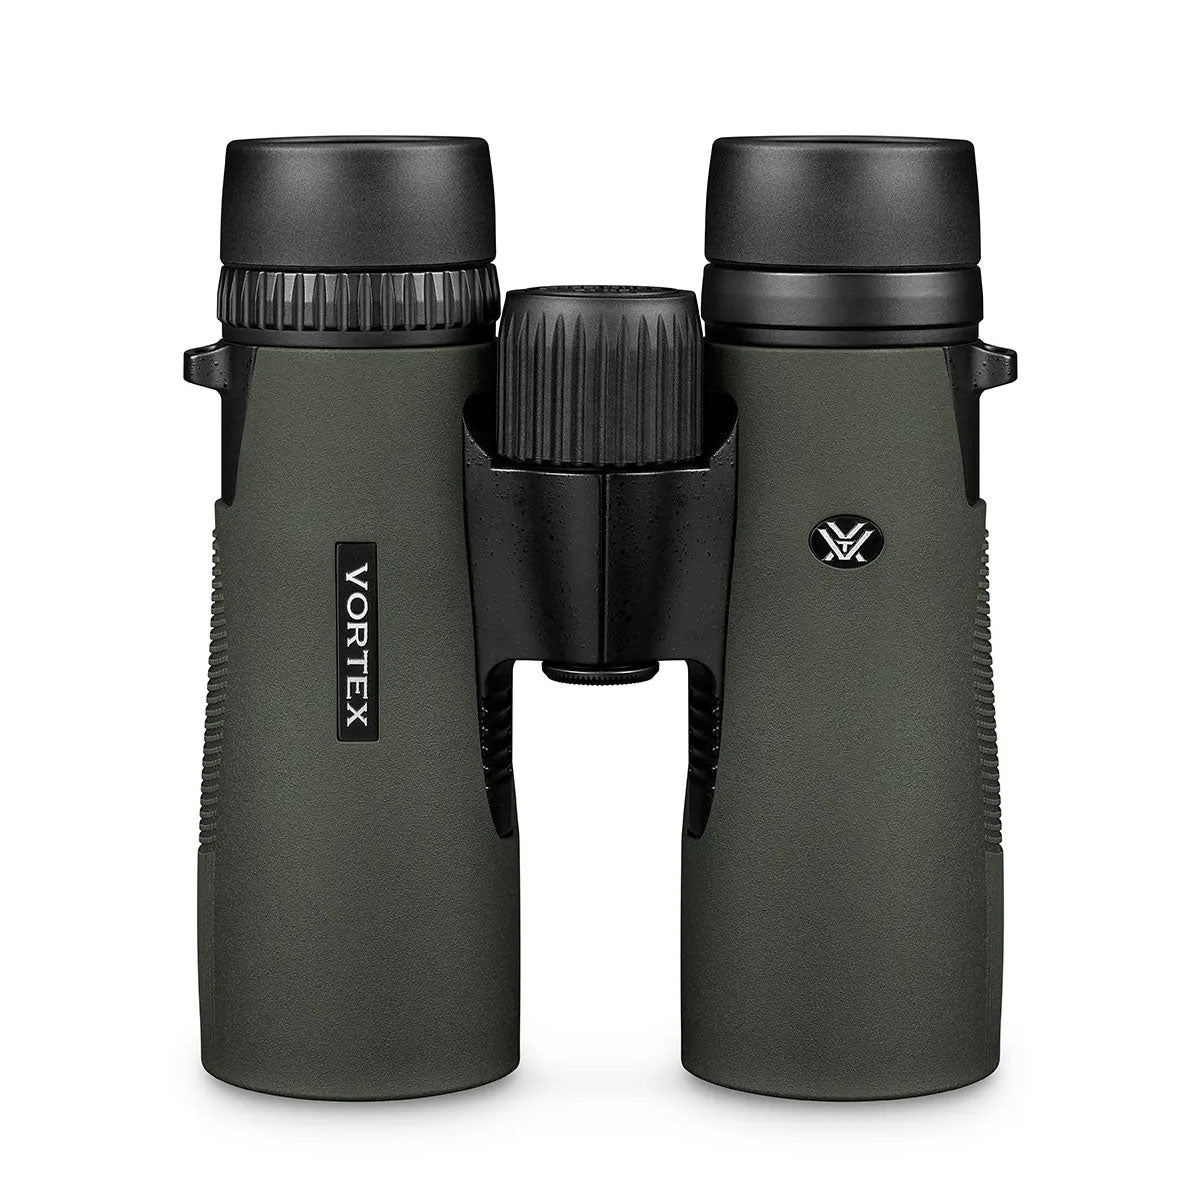 Vortex Diamondback HD 10x42 Binocular available online from red mills outdoor pursuits